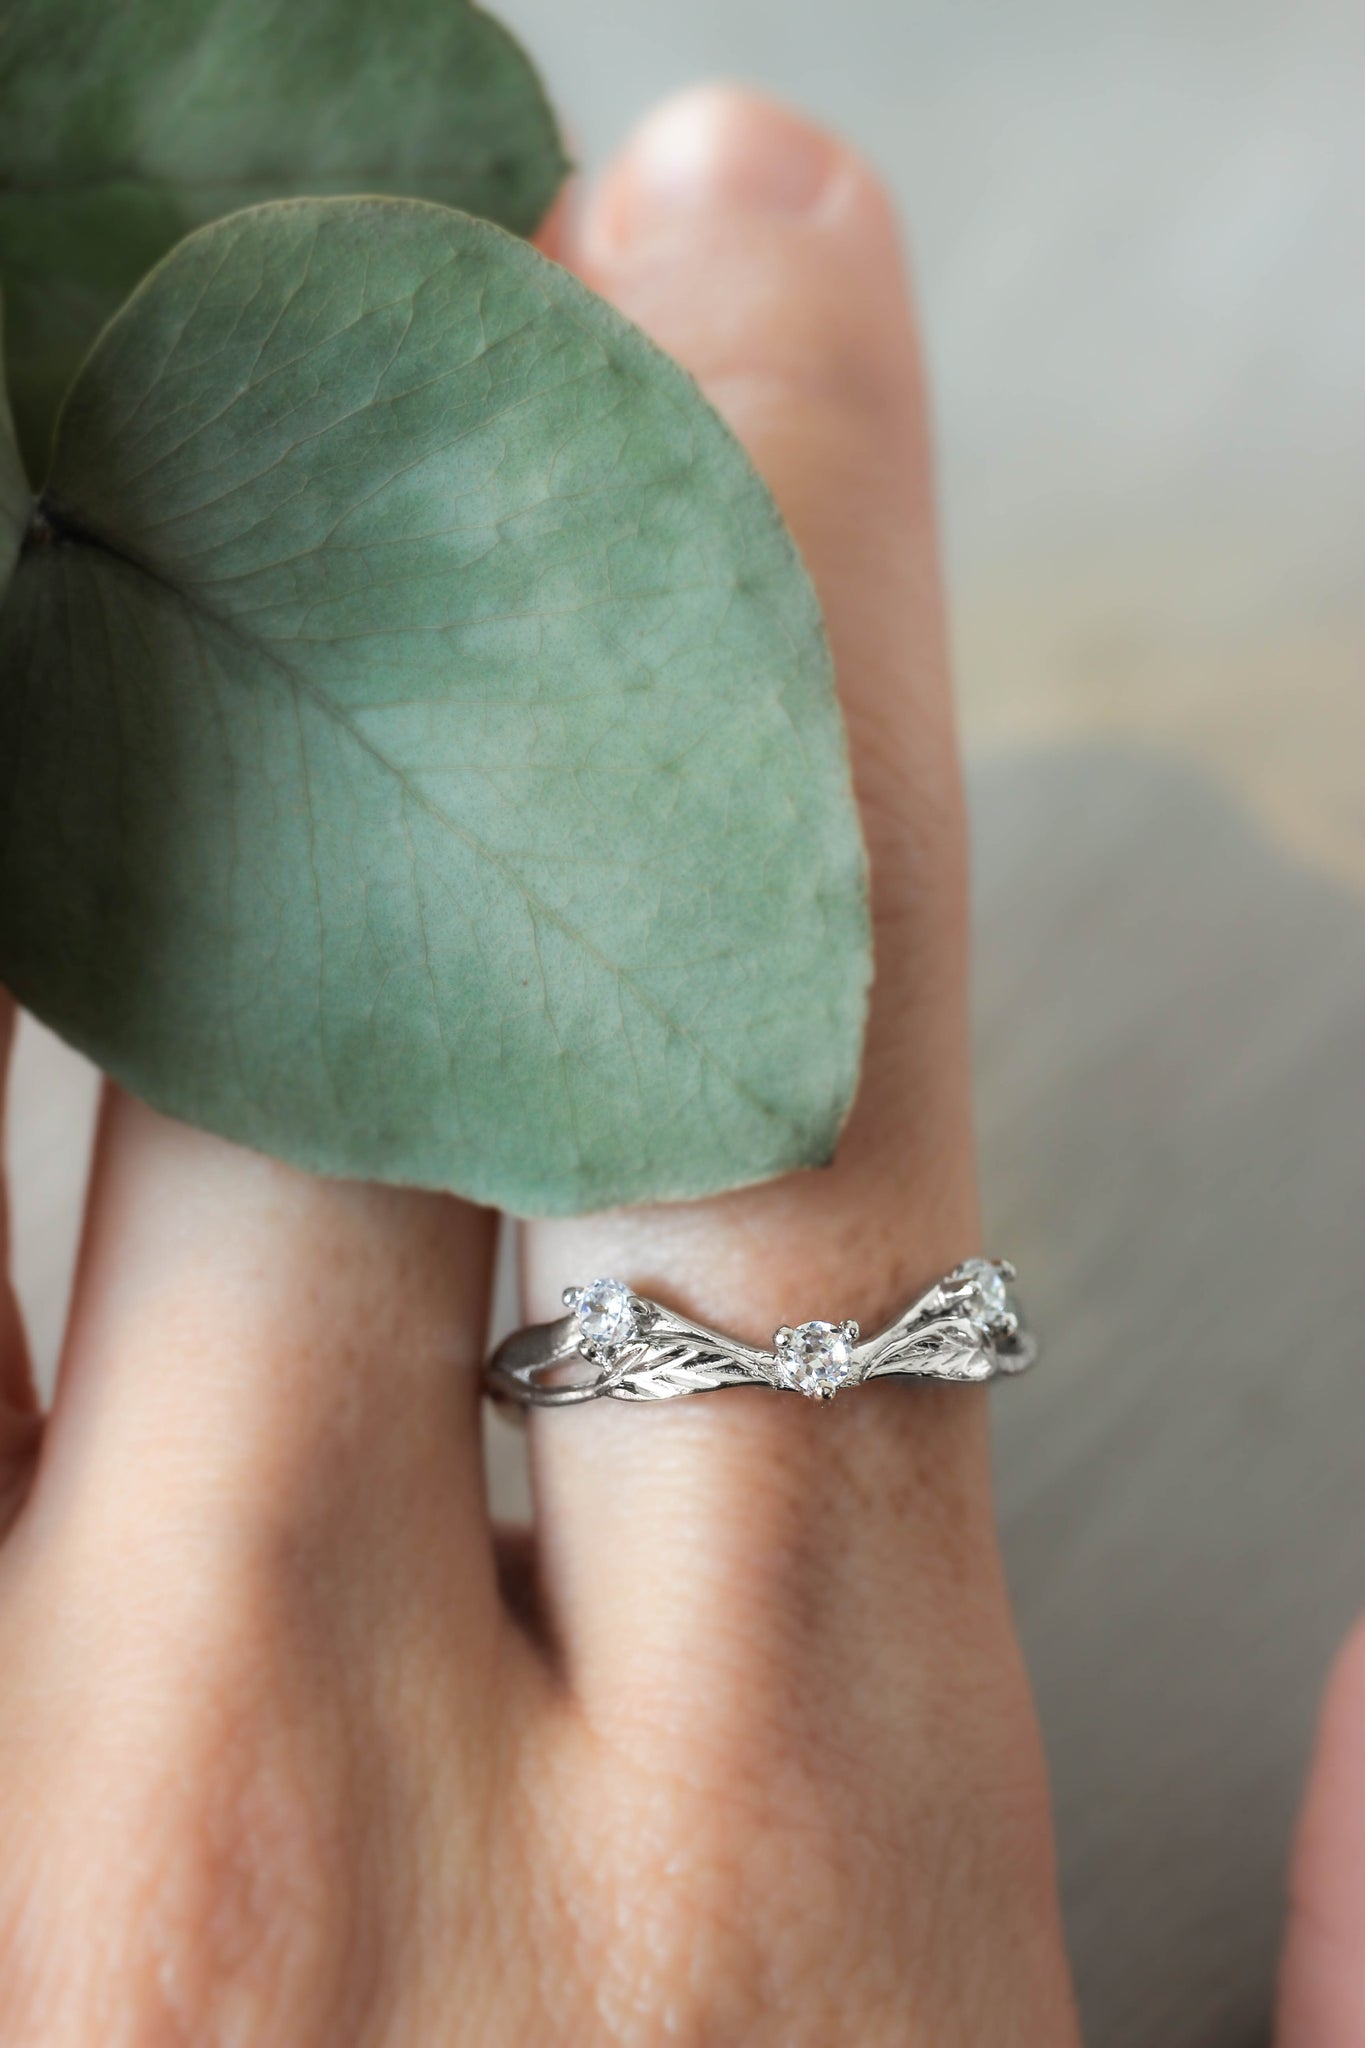 Curved wedding ring with three diamonds - Eden Garden Jewelry™